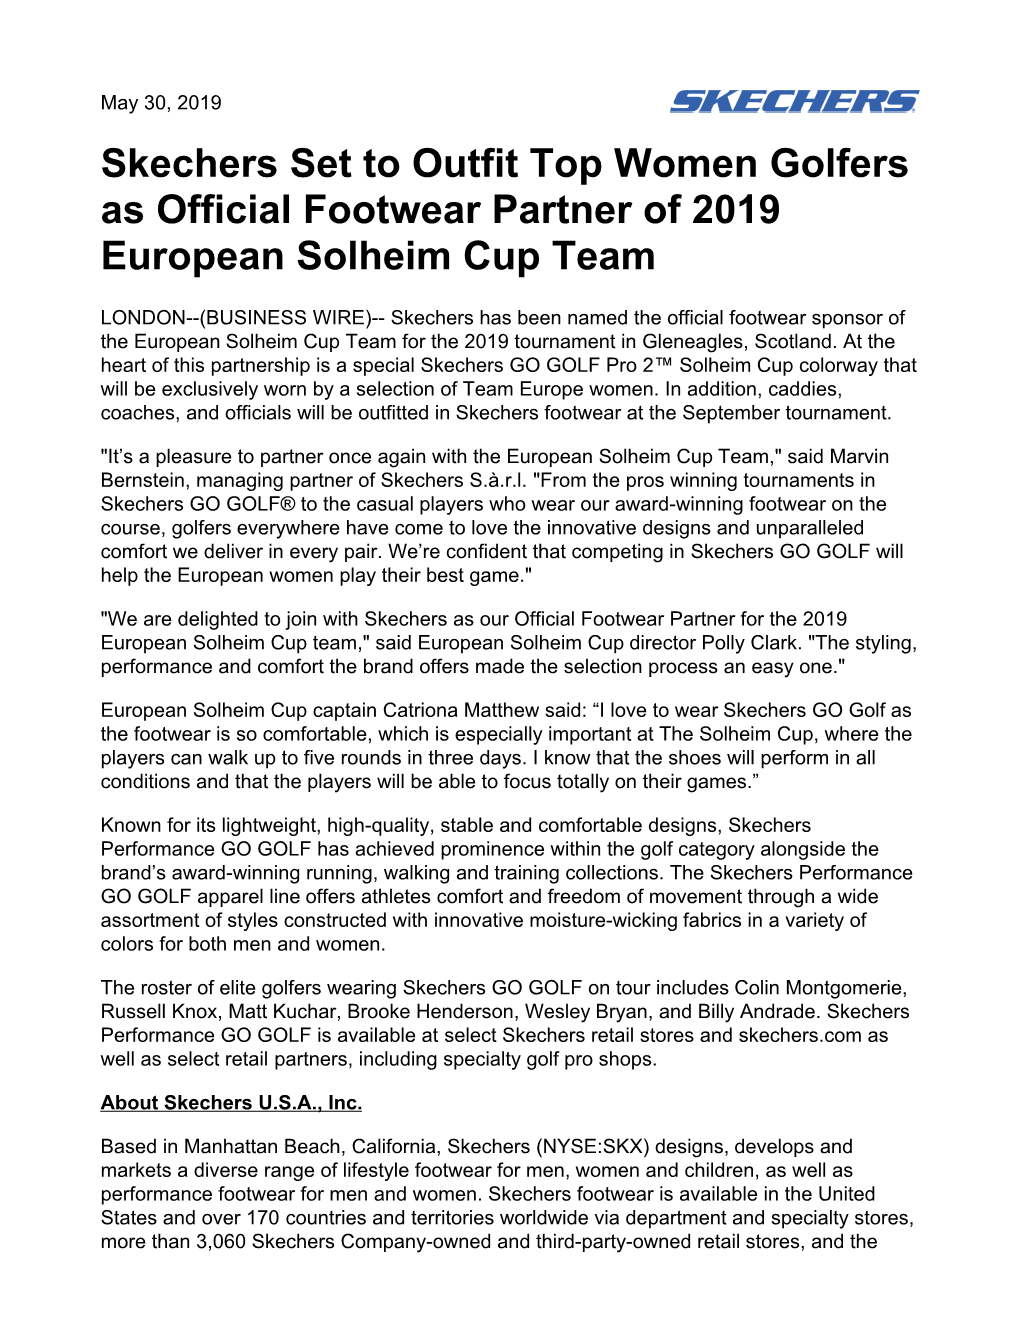 Skechers Set to Outfit Top Women Golfers As Official Footwear Partner of 2019 European Solheim Cup Team